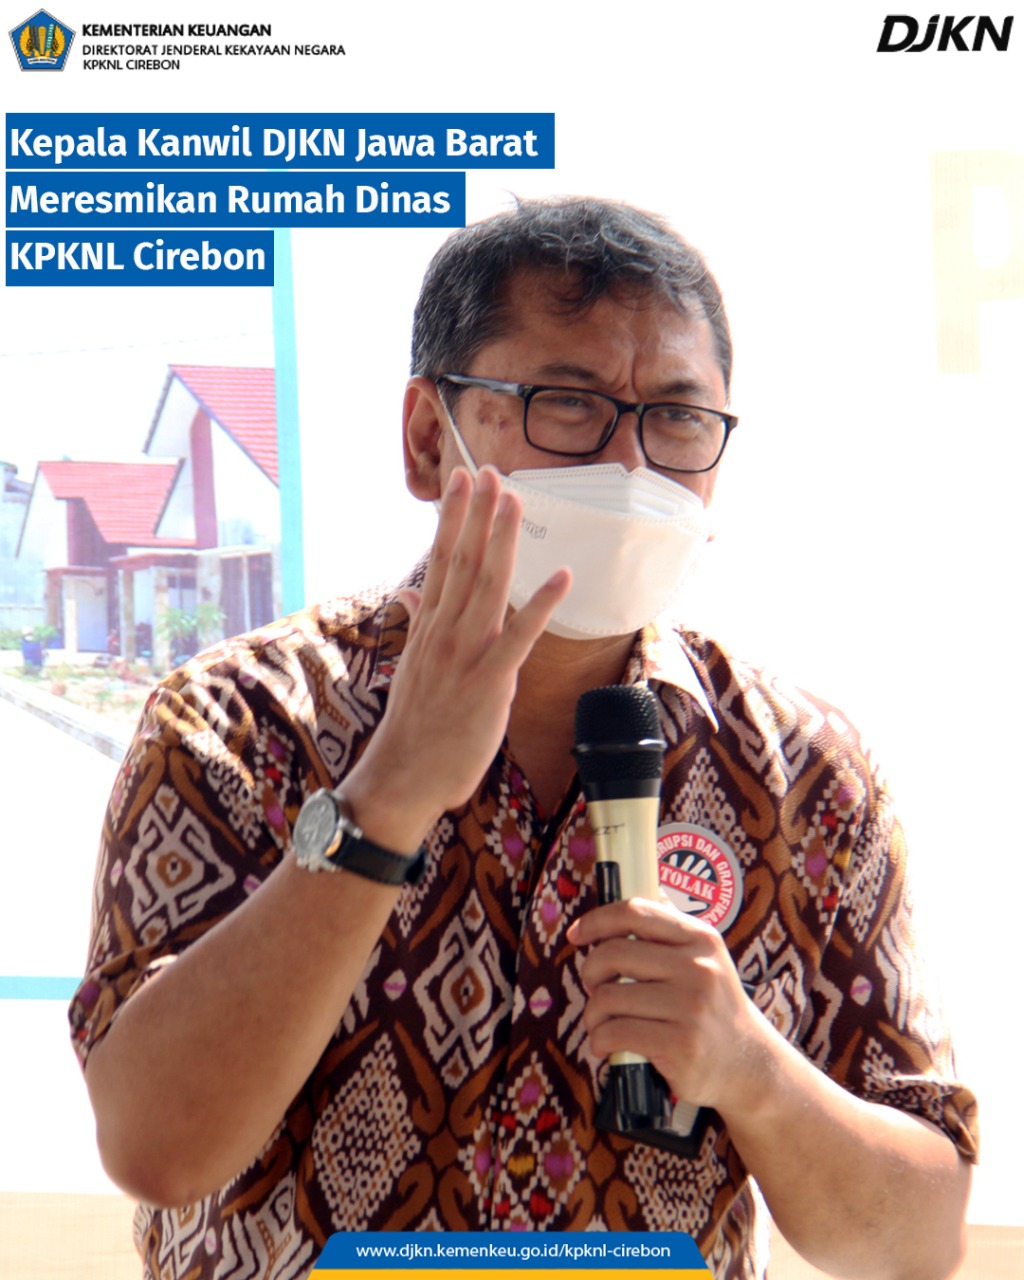 Resmikan Rumah Dinas KPKNL Cirebon, Tavianto Noegroho: Penghuni Akan Memberikan Multiplier Effect Ekonomi